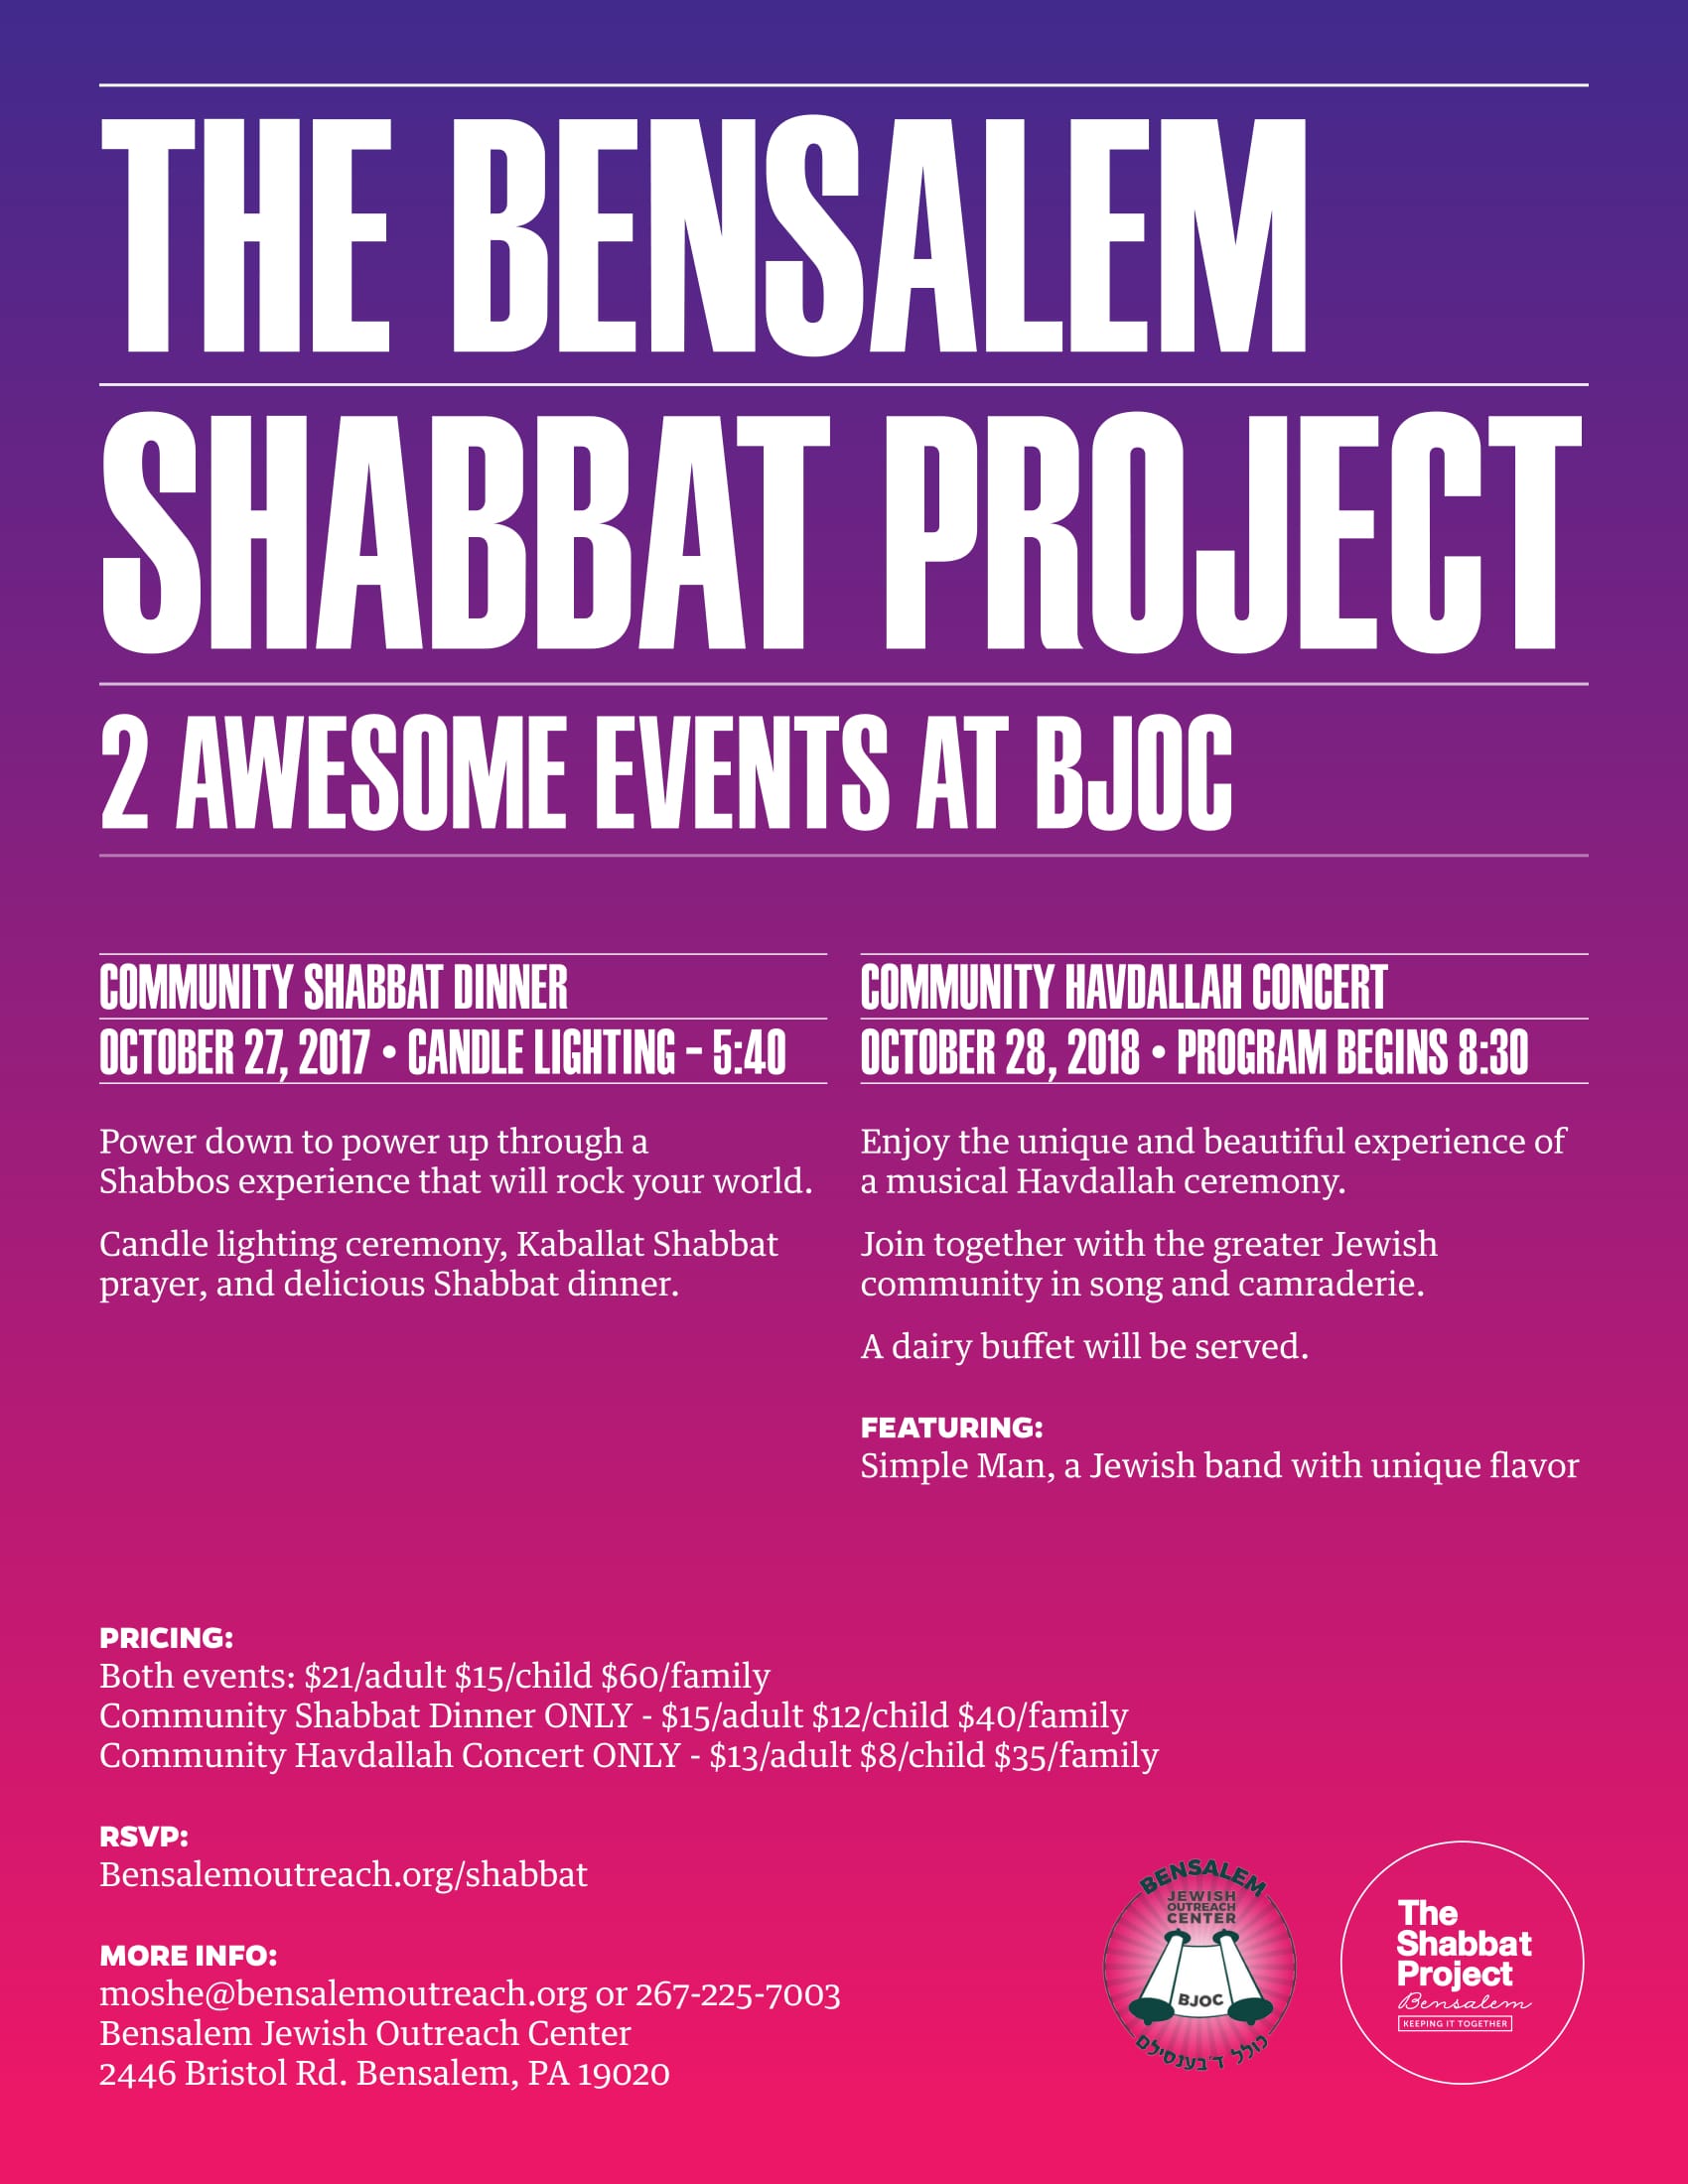 The Bensalem Shabbos Project